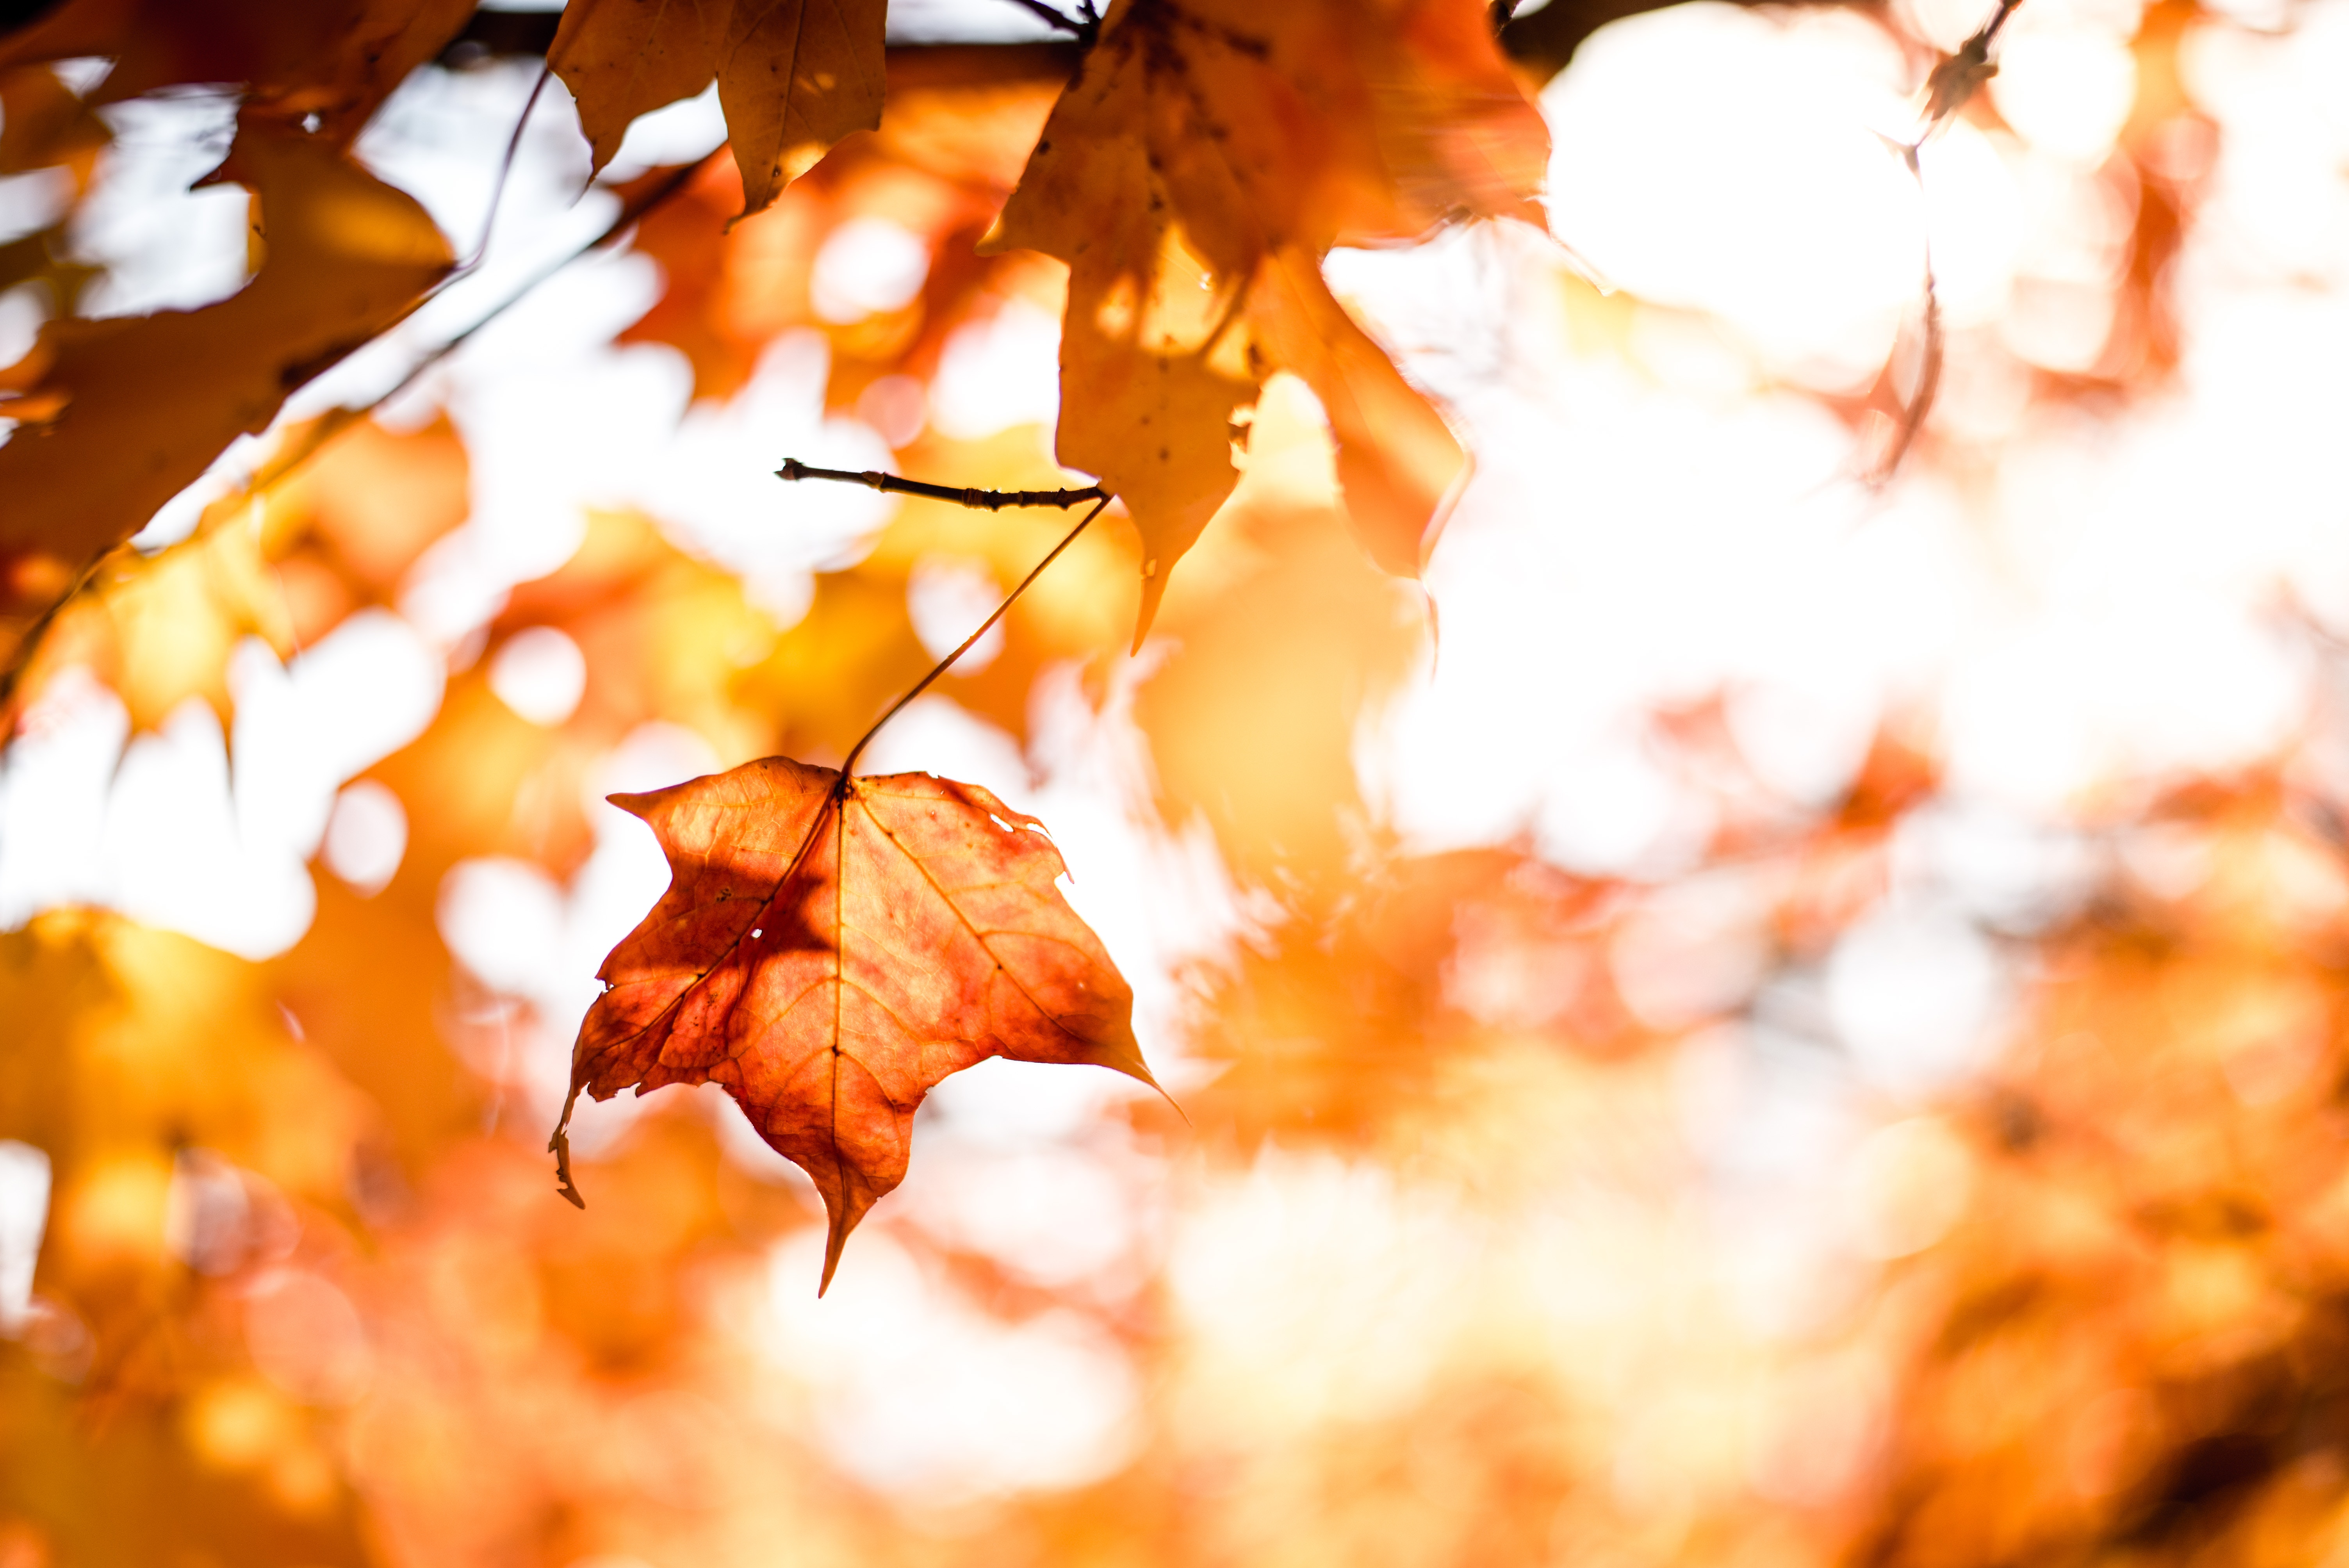 6016x4016 #leaf, #fall wallpaper, #wallpaper, #sun, #Free image, #amber, #foliage, #autumn, #tree, #leafe, #fall, #fall background, #branch, #light. Mocah HD Wallpaper